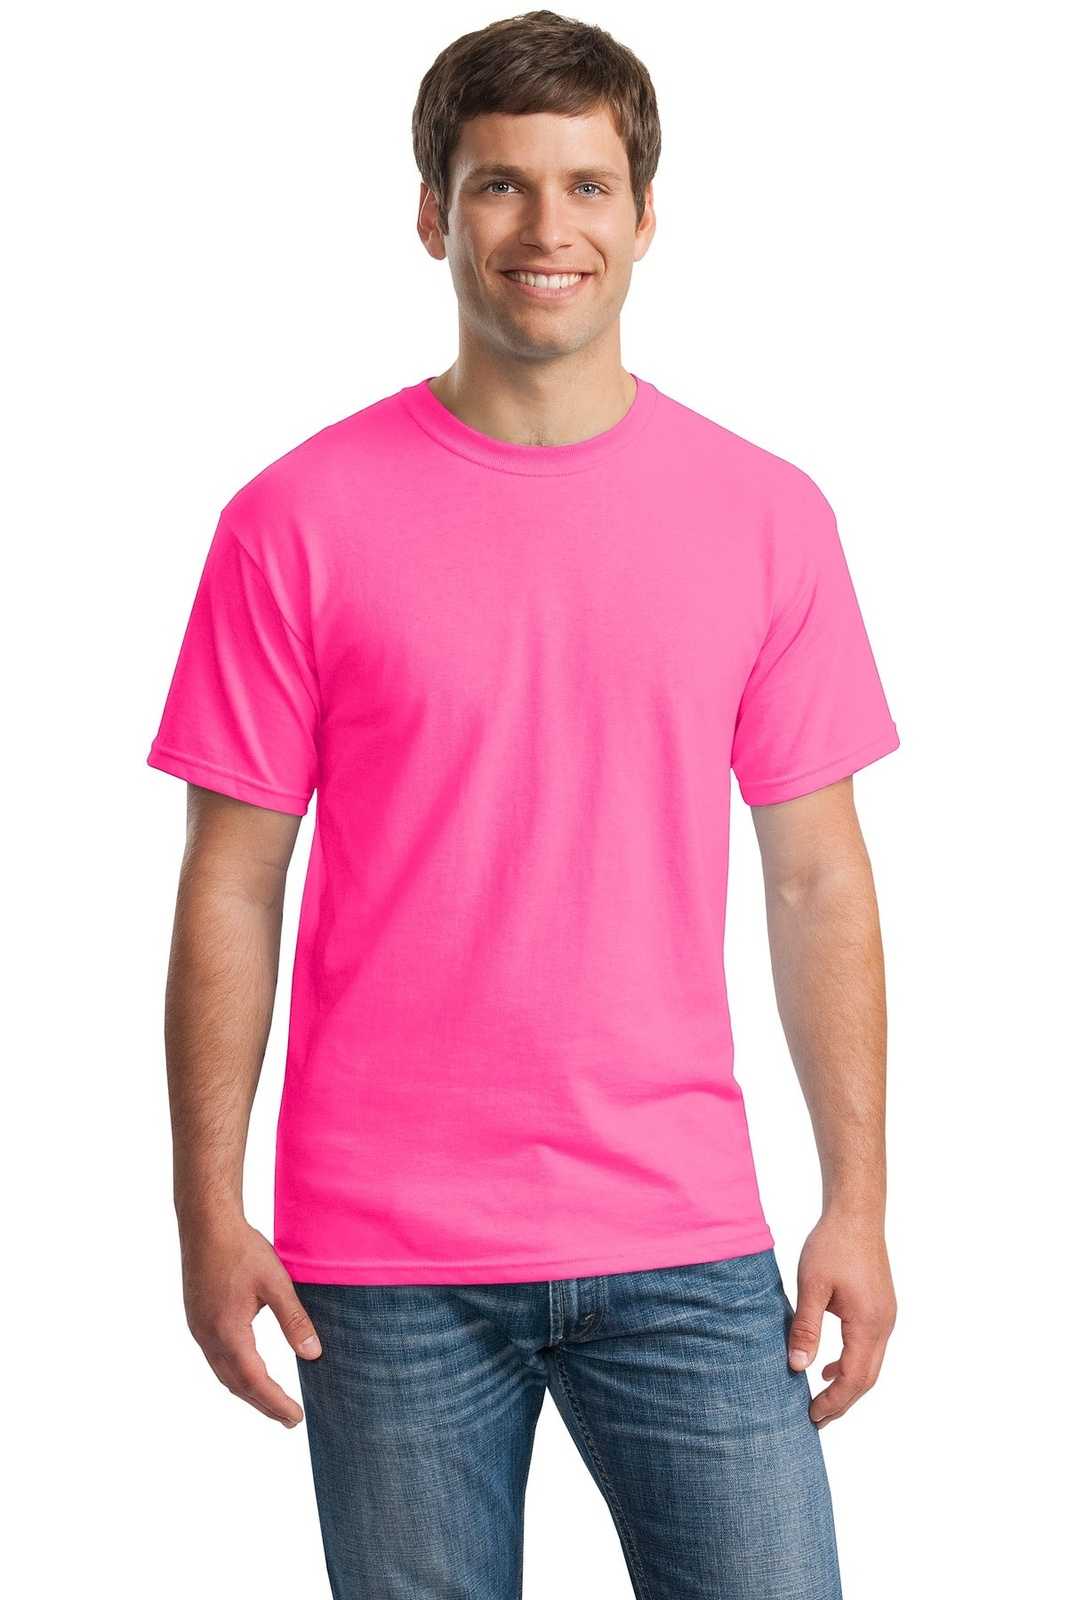 Gildan 5000 Heavy Cotton 100% Cotton T-Shirt - Safety Pink - HIT a Double